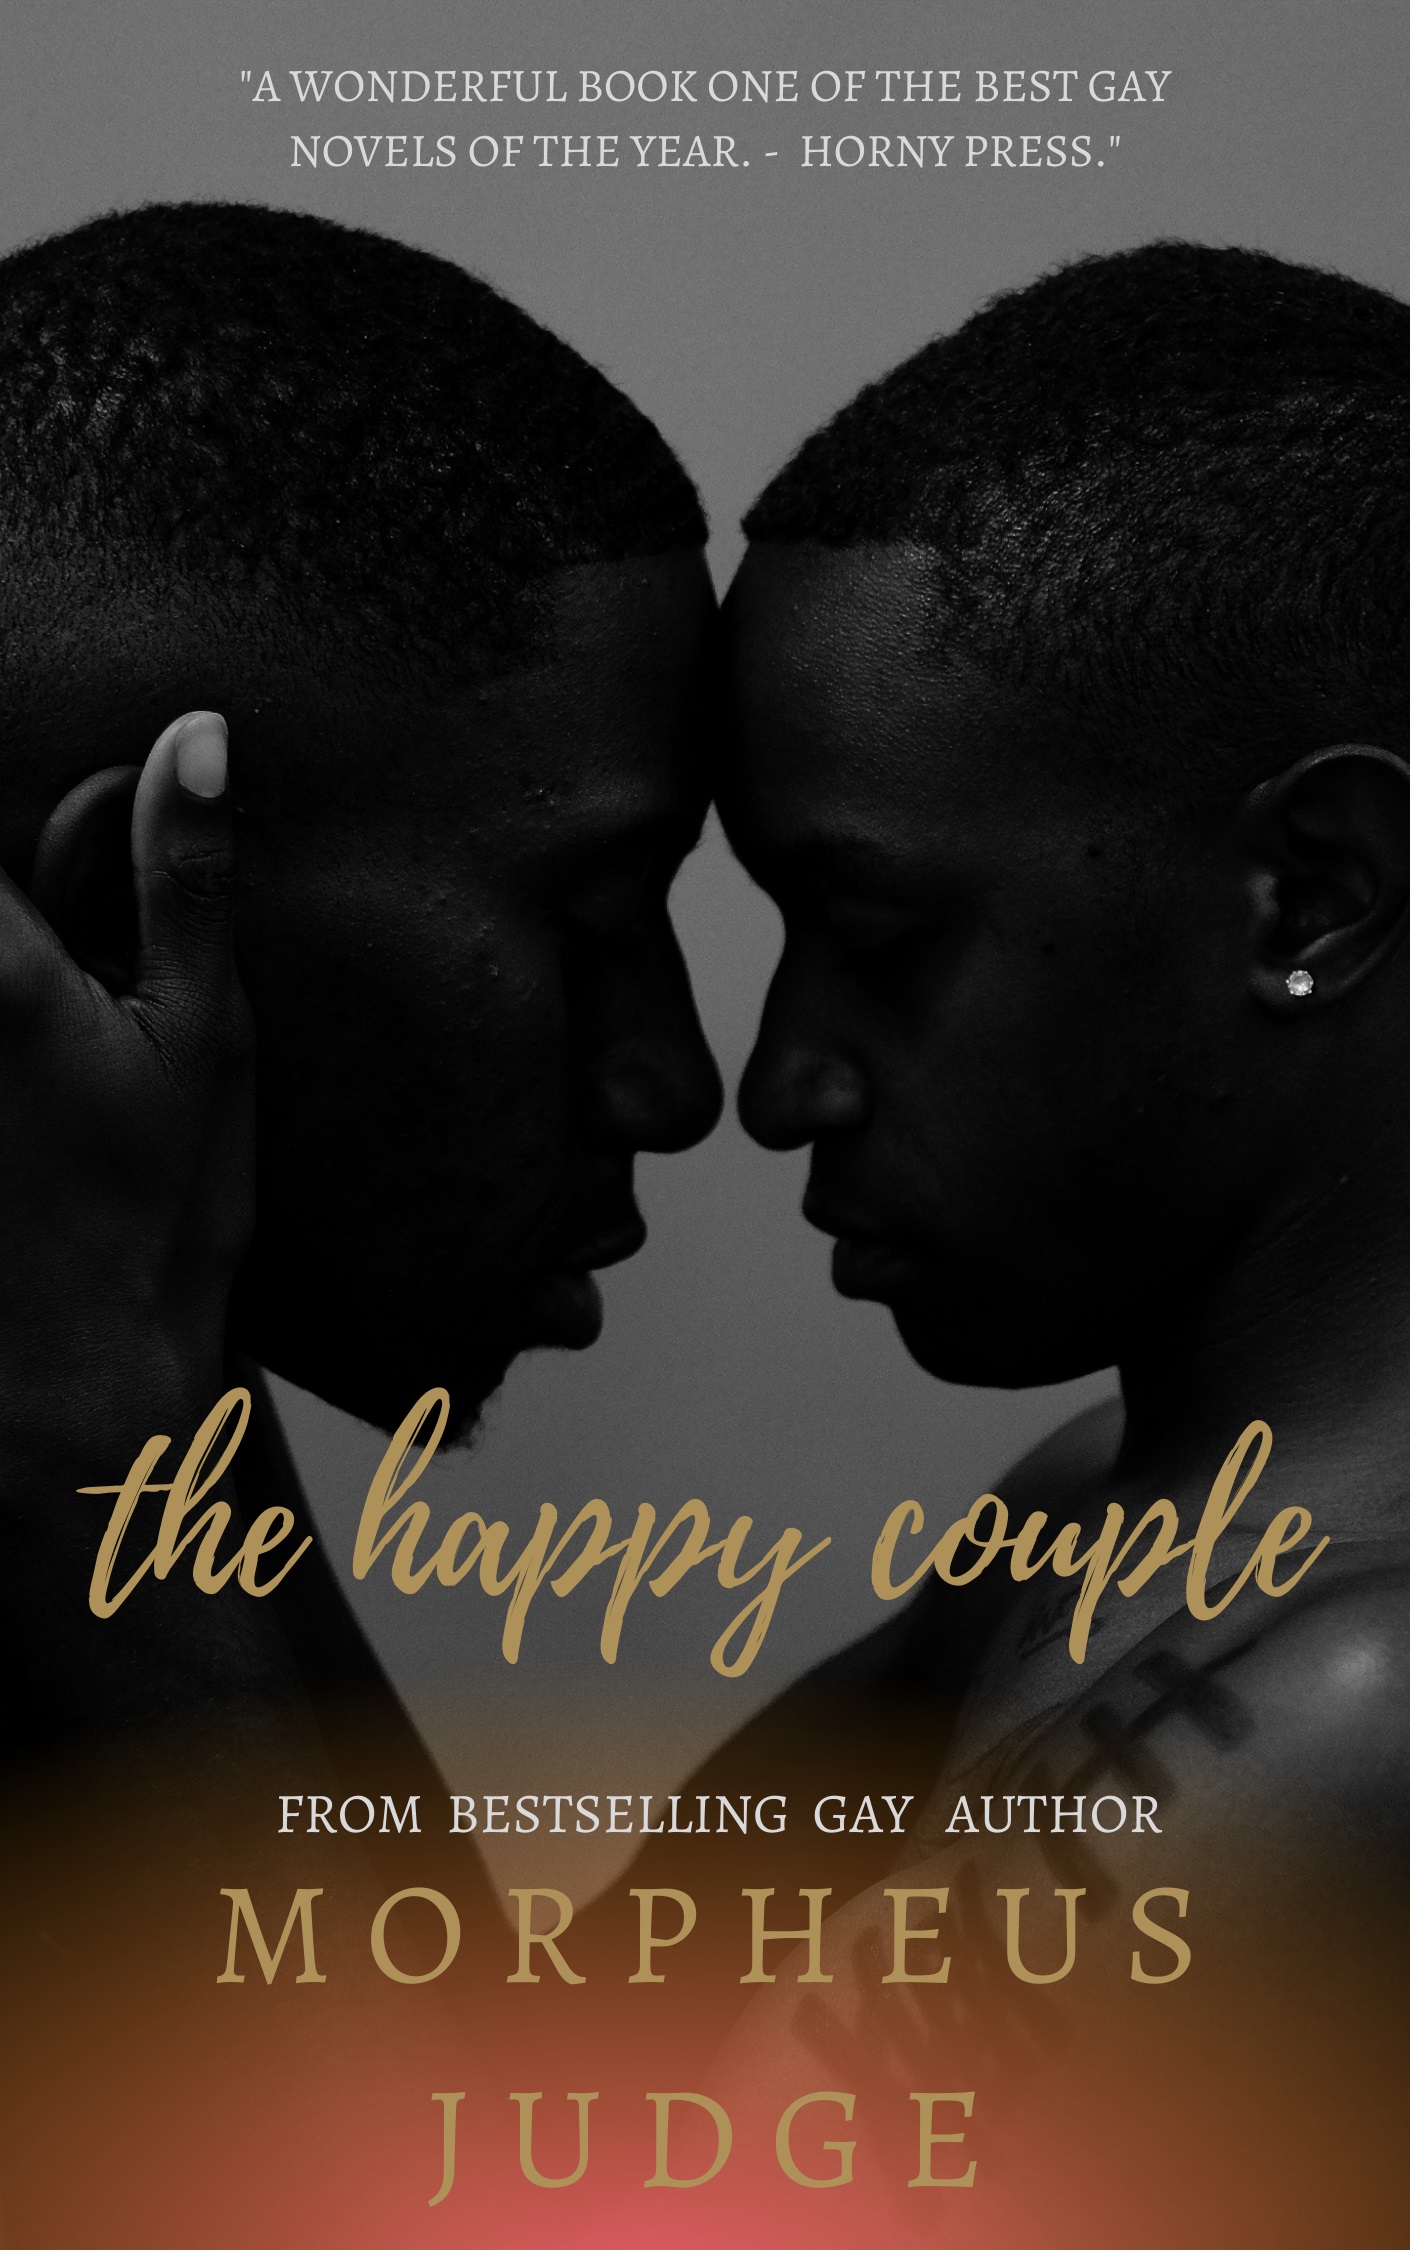 FREE: The Happy Couple by MORPHEUS JUDGE